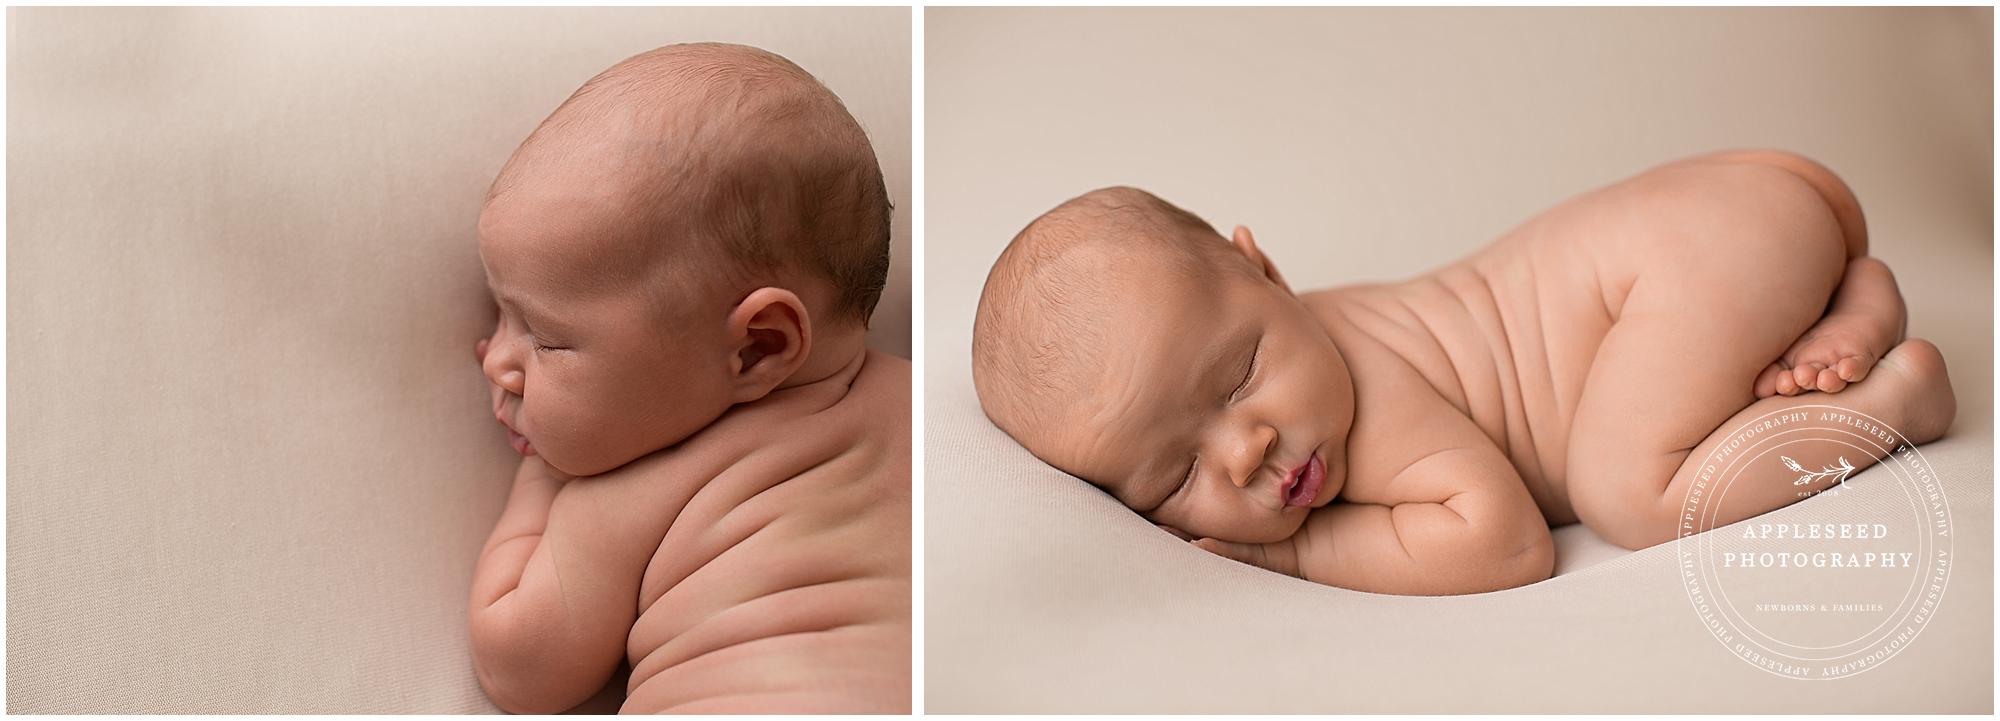 Newborn Photographer Atlanta | Rex | Appleseed Photography | Atlanta Newborn Photographer